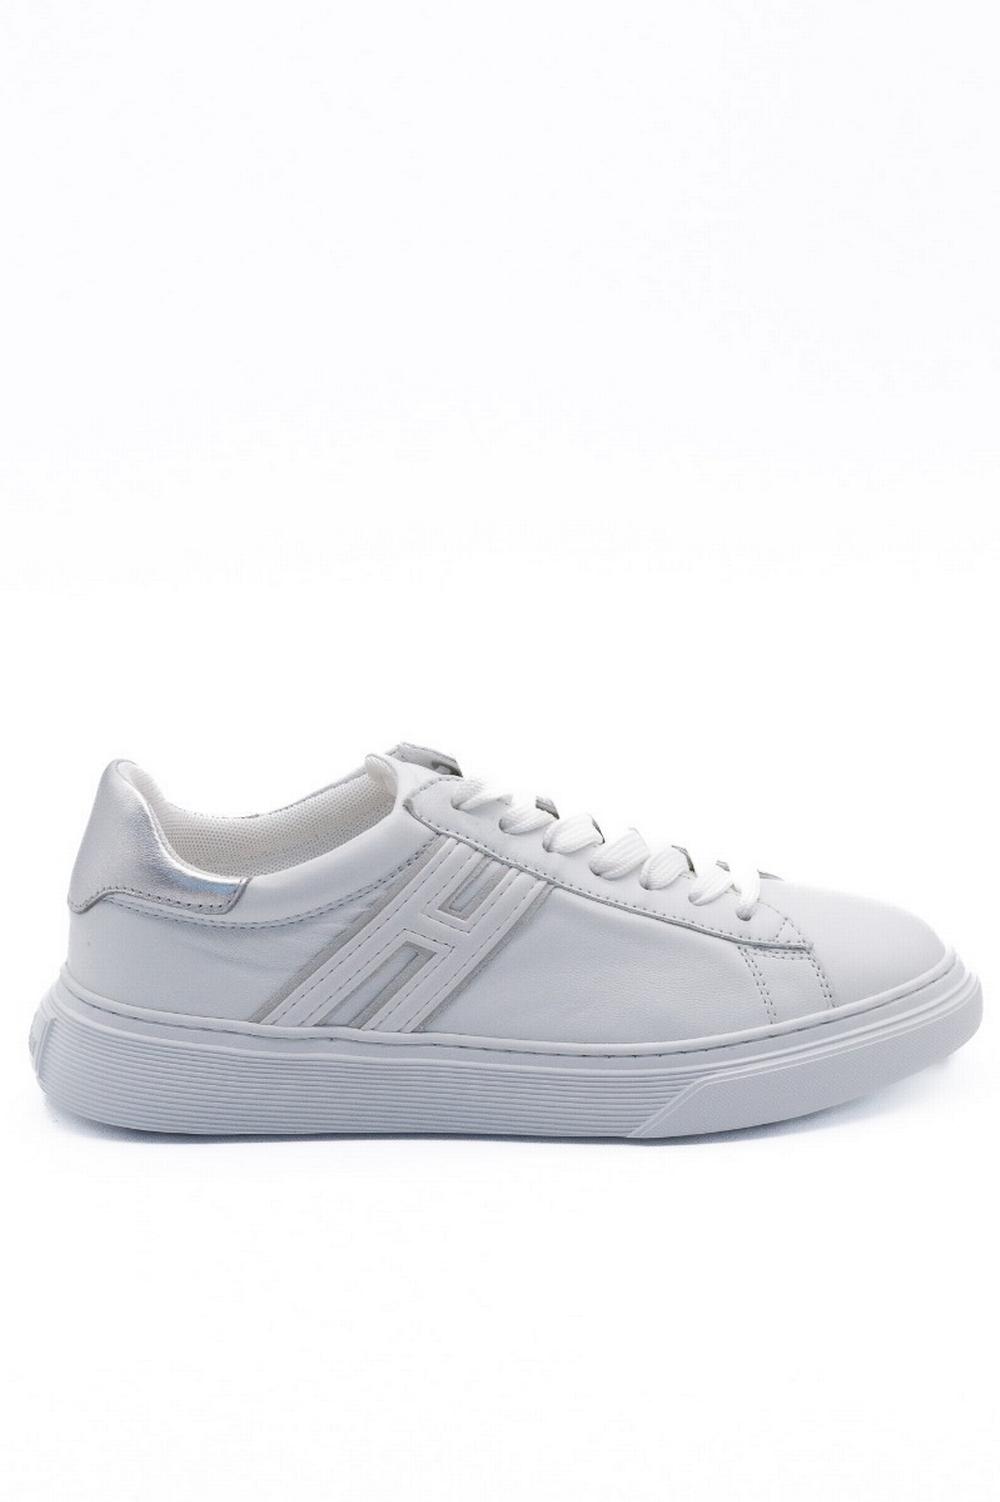 Hogan - Sneaker H365 Bianco/Silver Donna - HXW3650J310RNQ0351